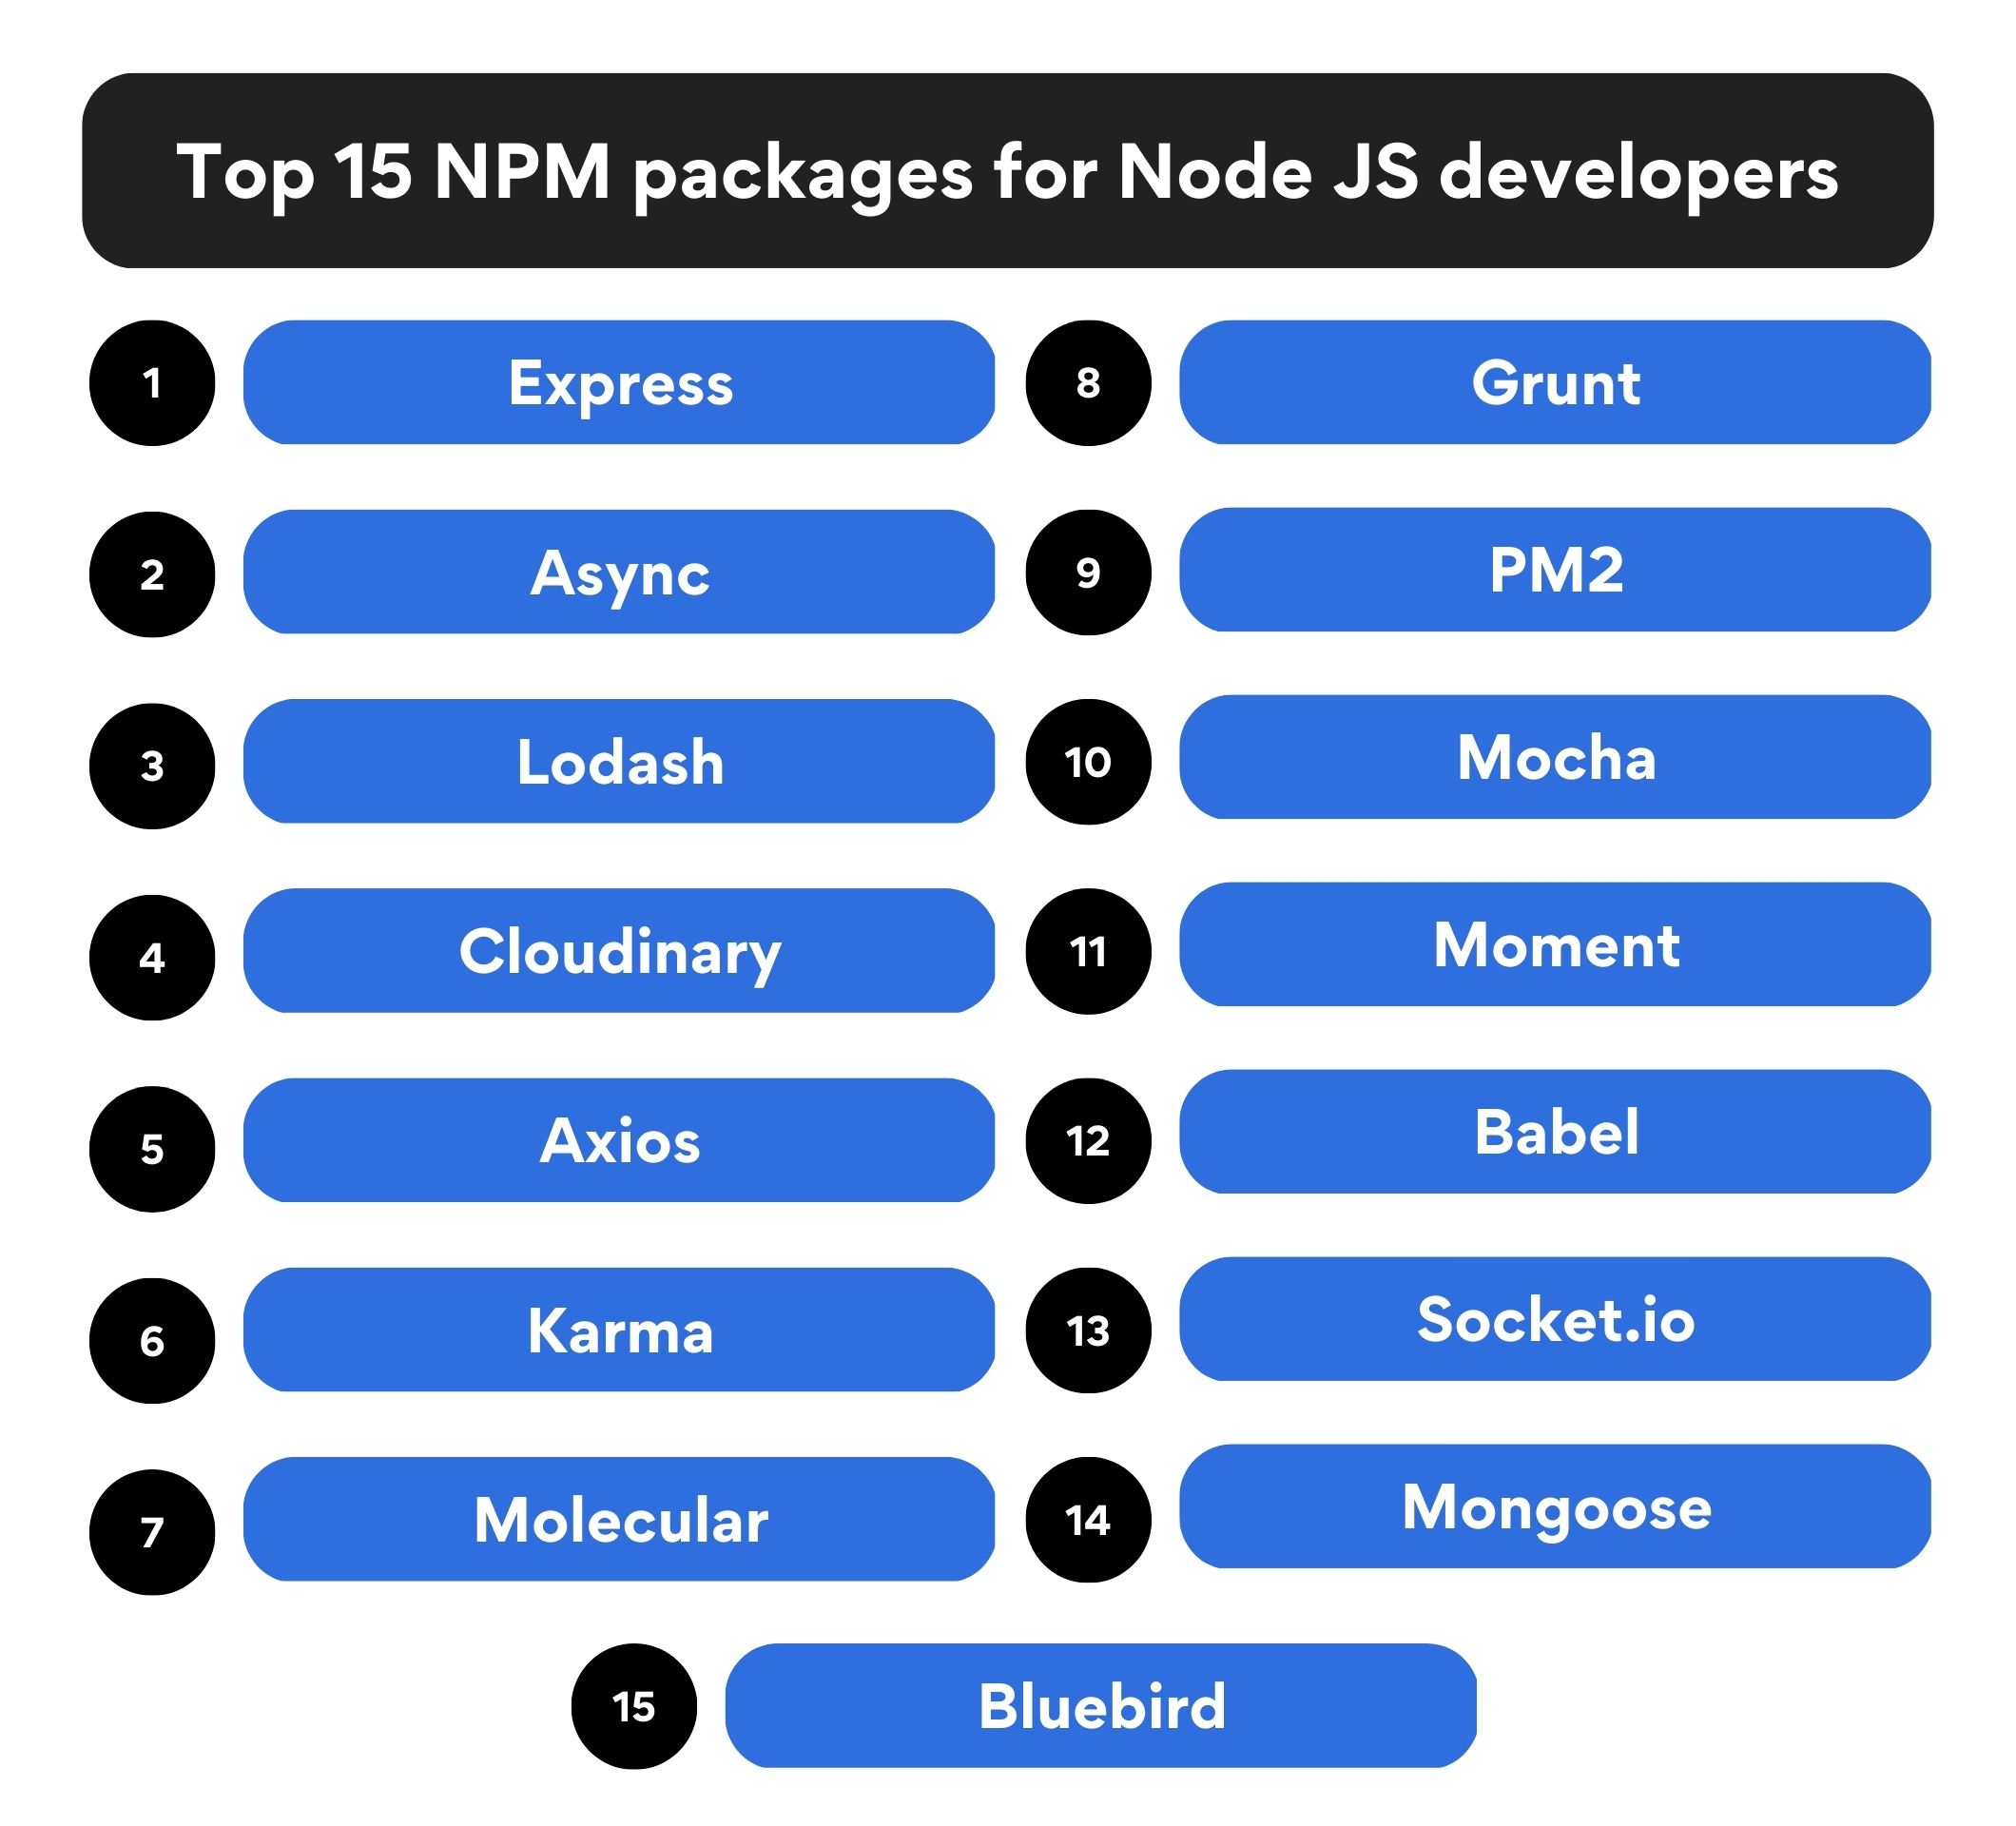 Top 15 NPM packages for Node JS developers